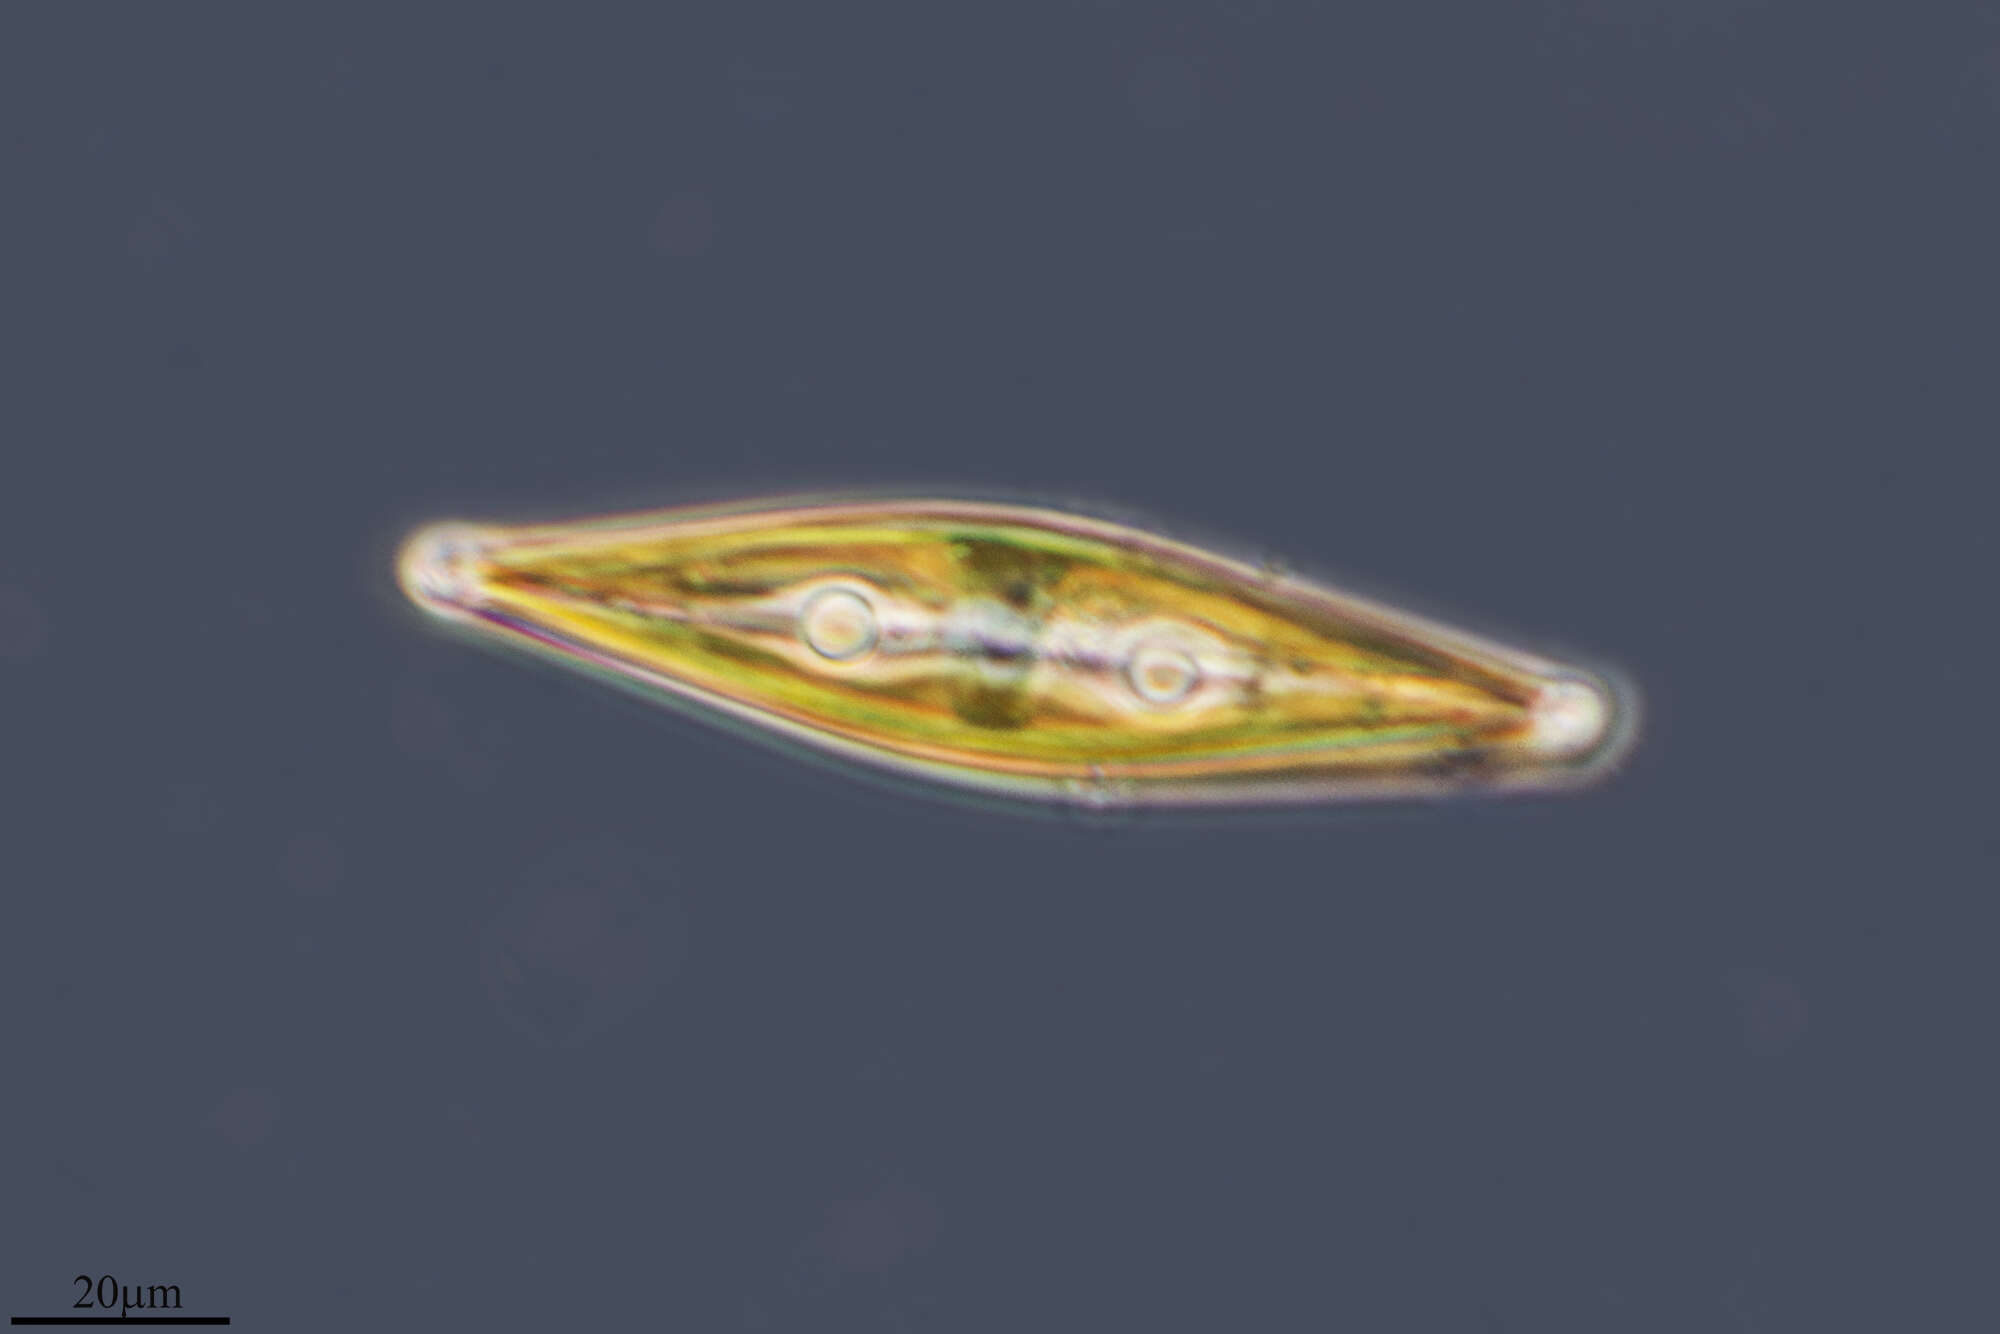 Image of SAR (Stramenopiles, Alveolates, Rhizaria)